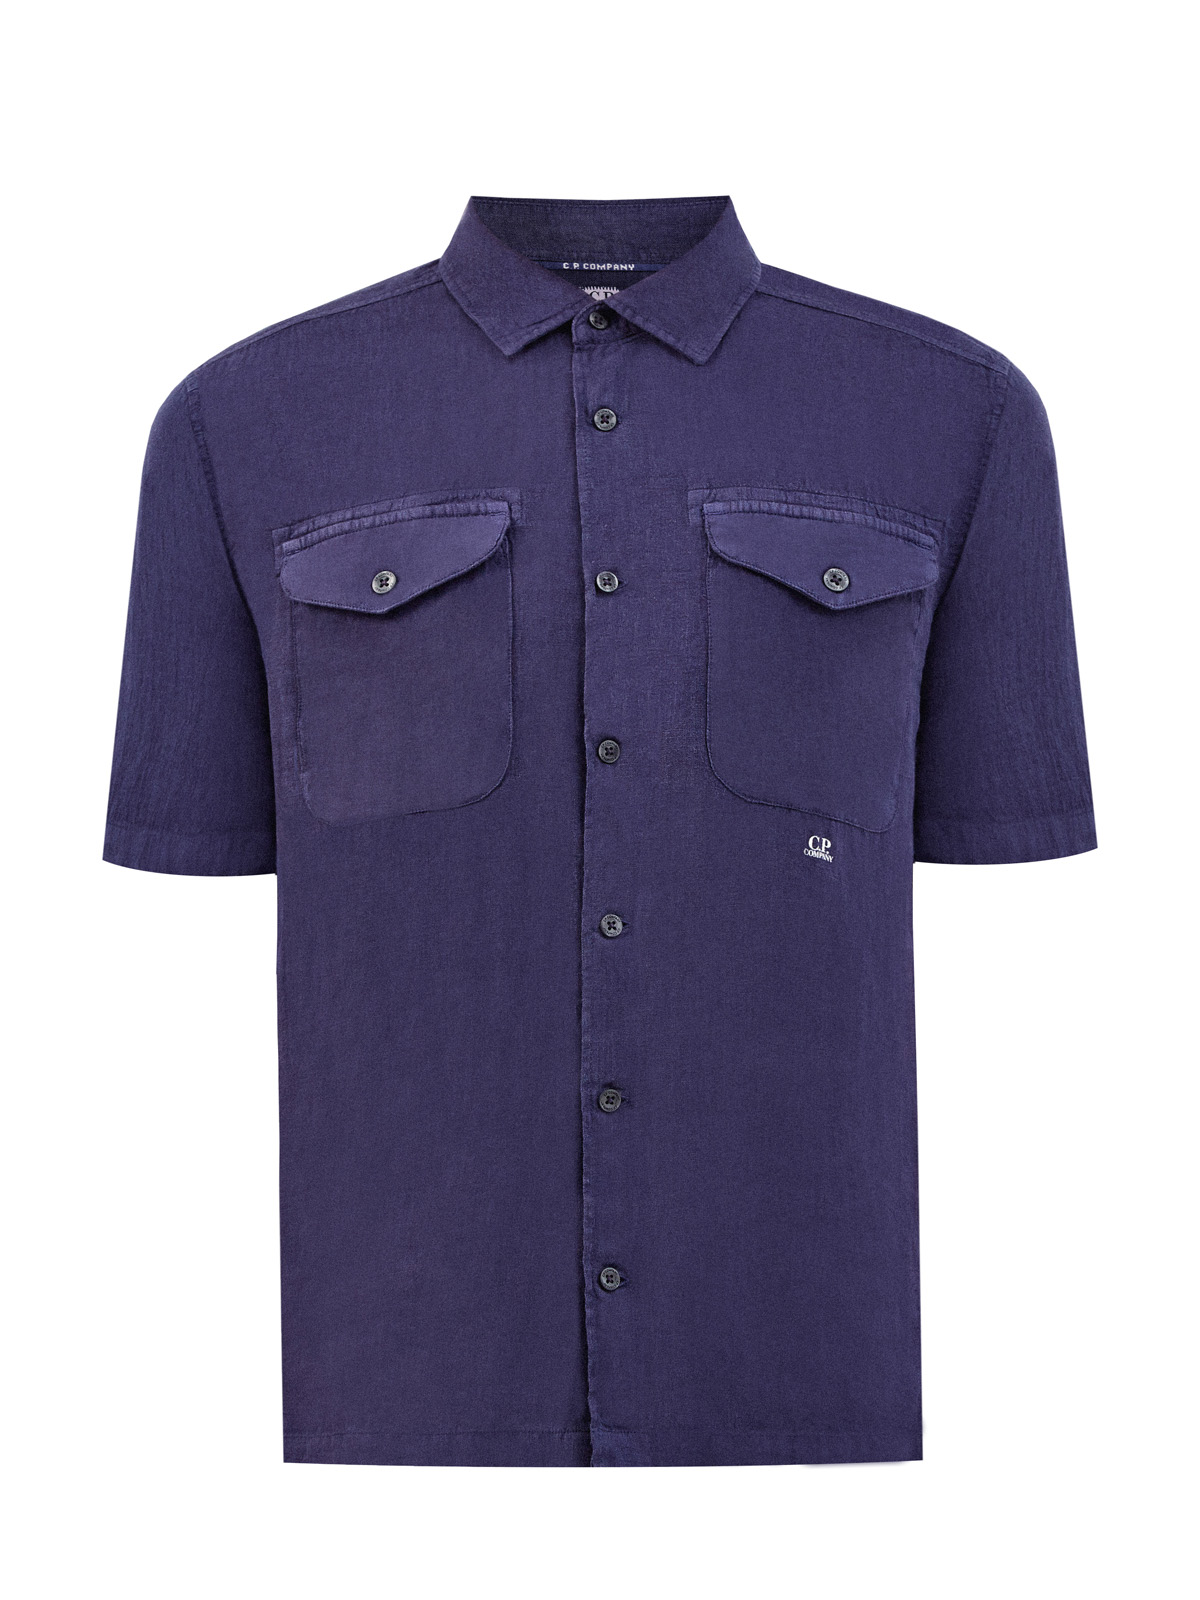 Окрашенная вручную рубашка из льна с короткими рукавами C.P.COMPANY, цвет синий, размер M;L;XL;2XL